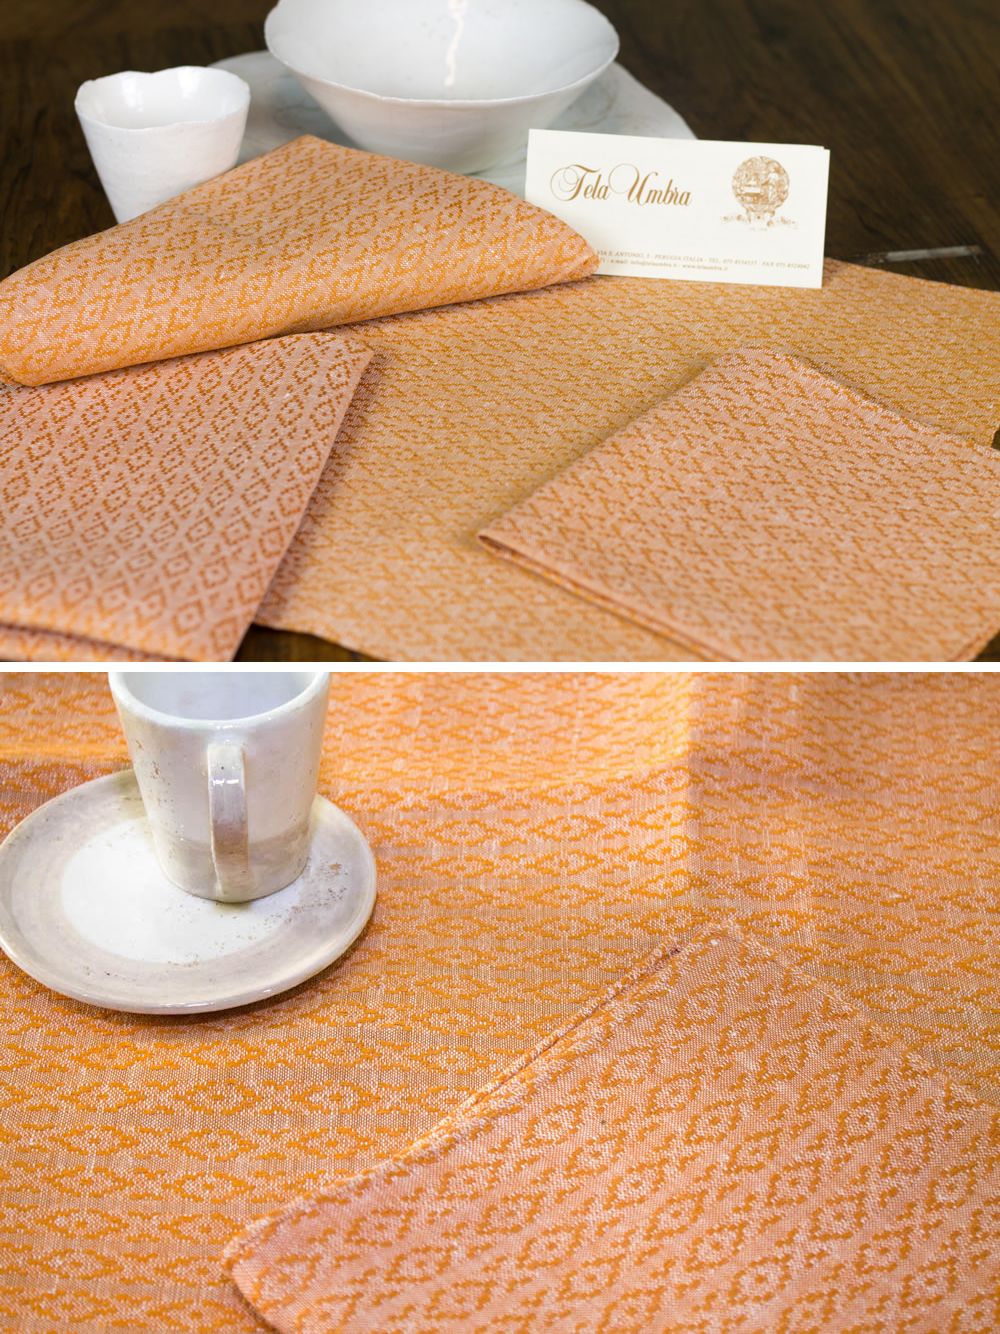 Centro tavola tessuto 11A classico color arancio Tela Umbra